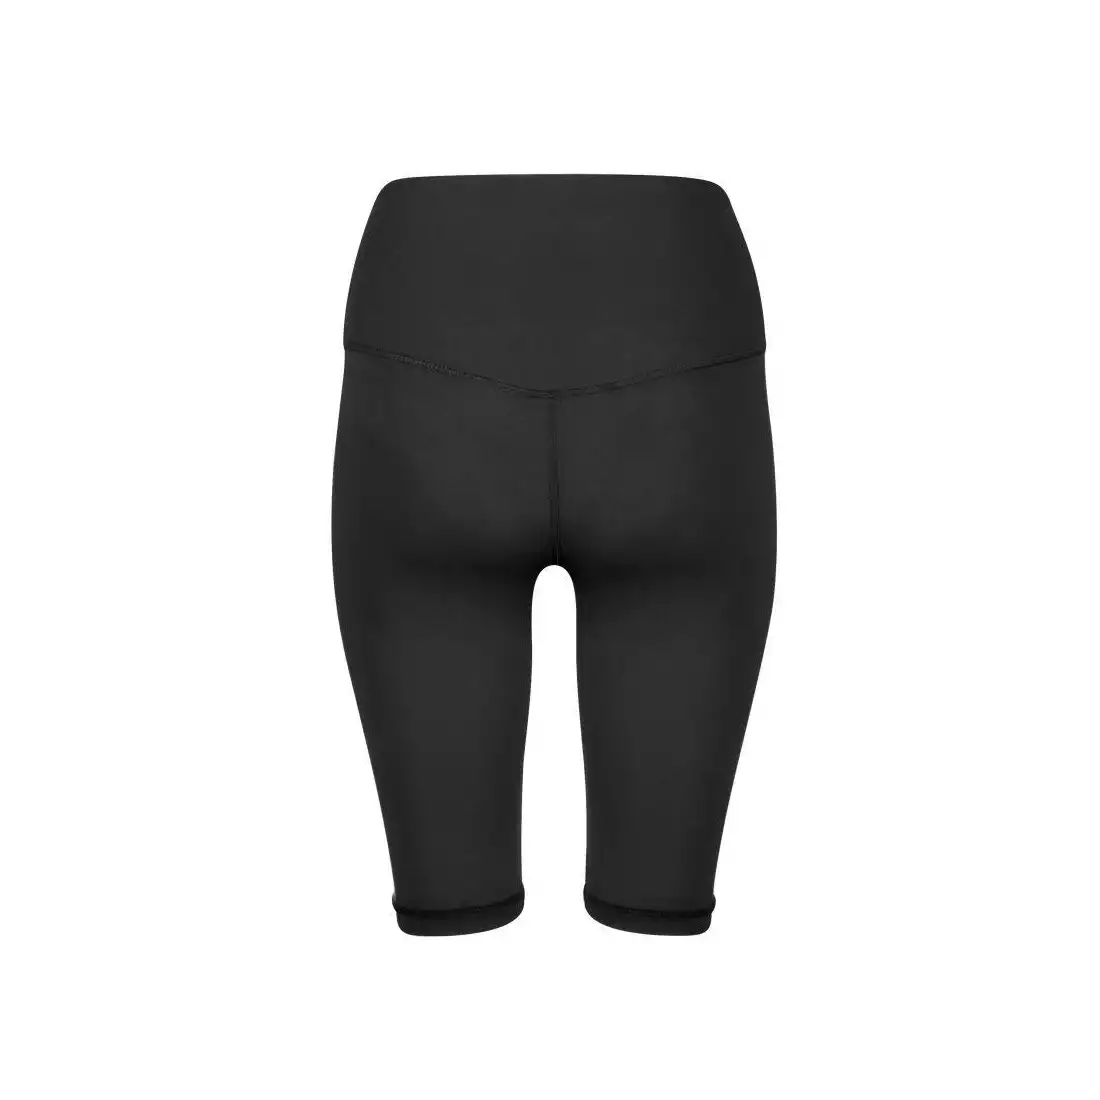 FORCE SIMPLE women's sports shorts, black